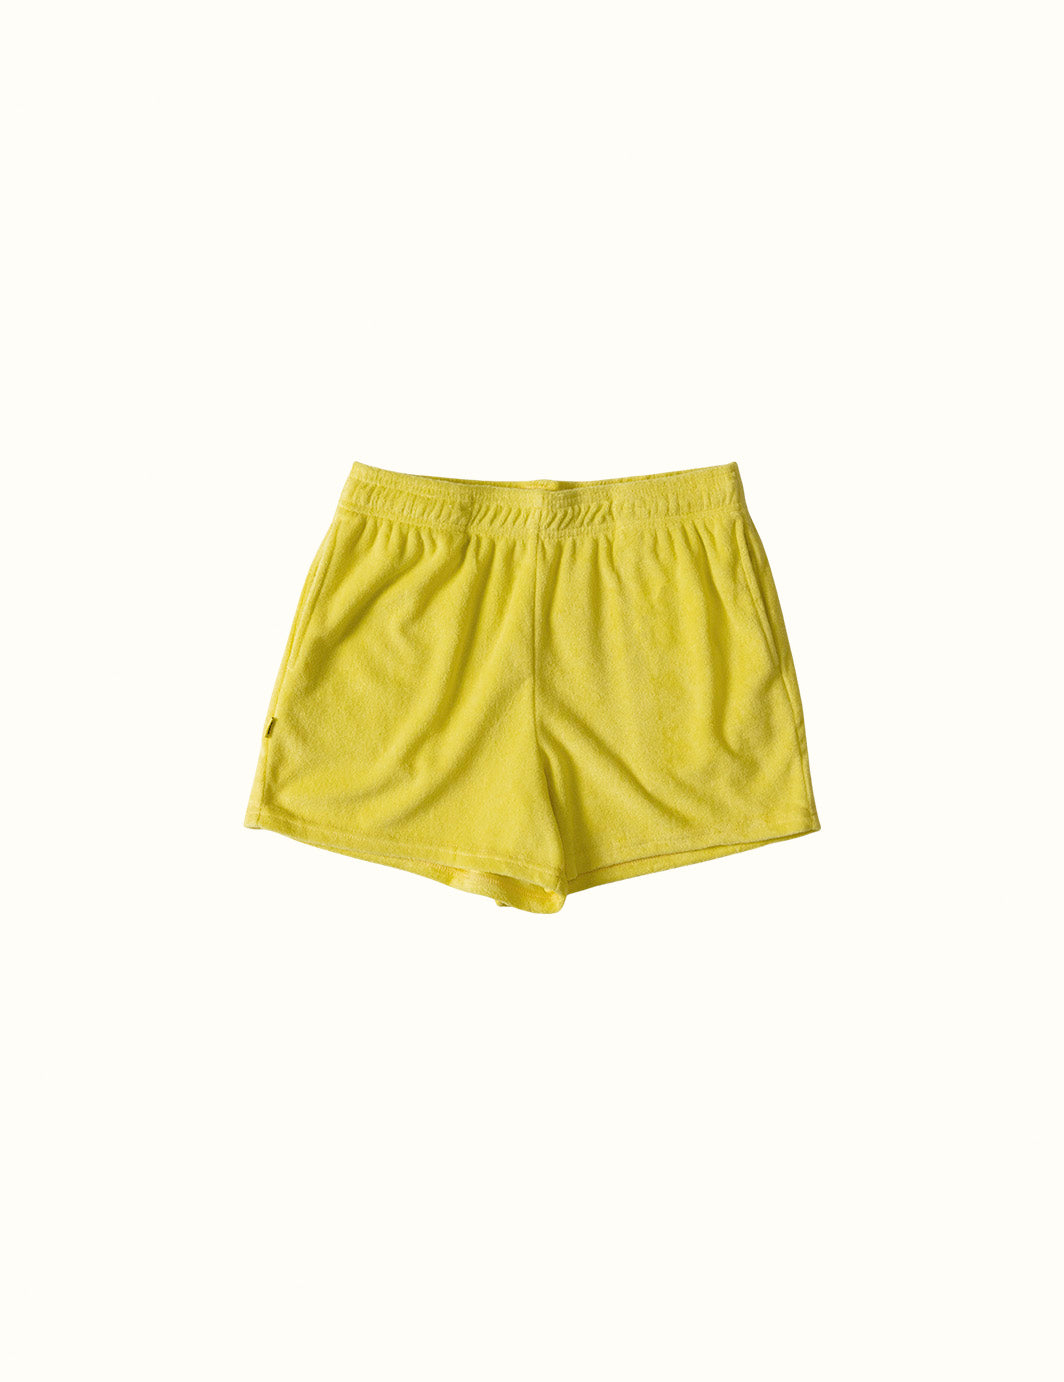 Women's Cabana Shorts, Women's Lounge Shorts, Cabana Shorts